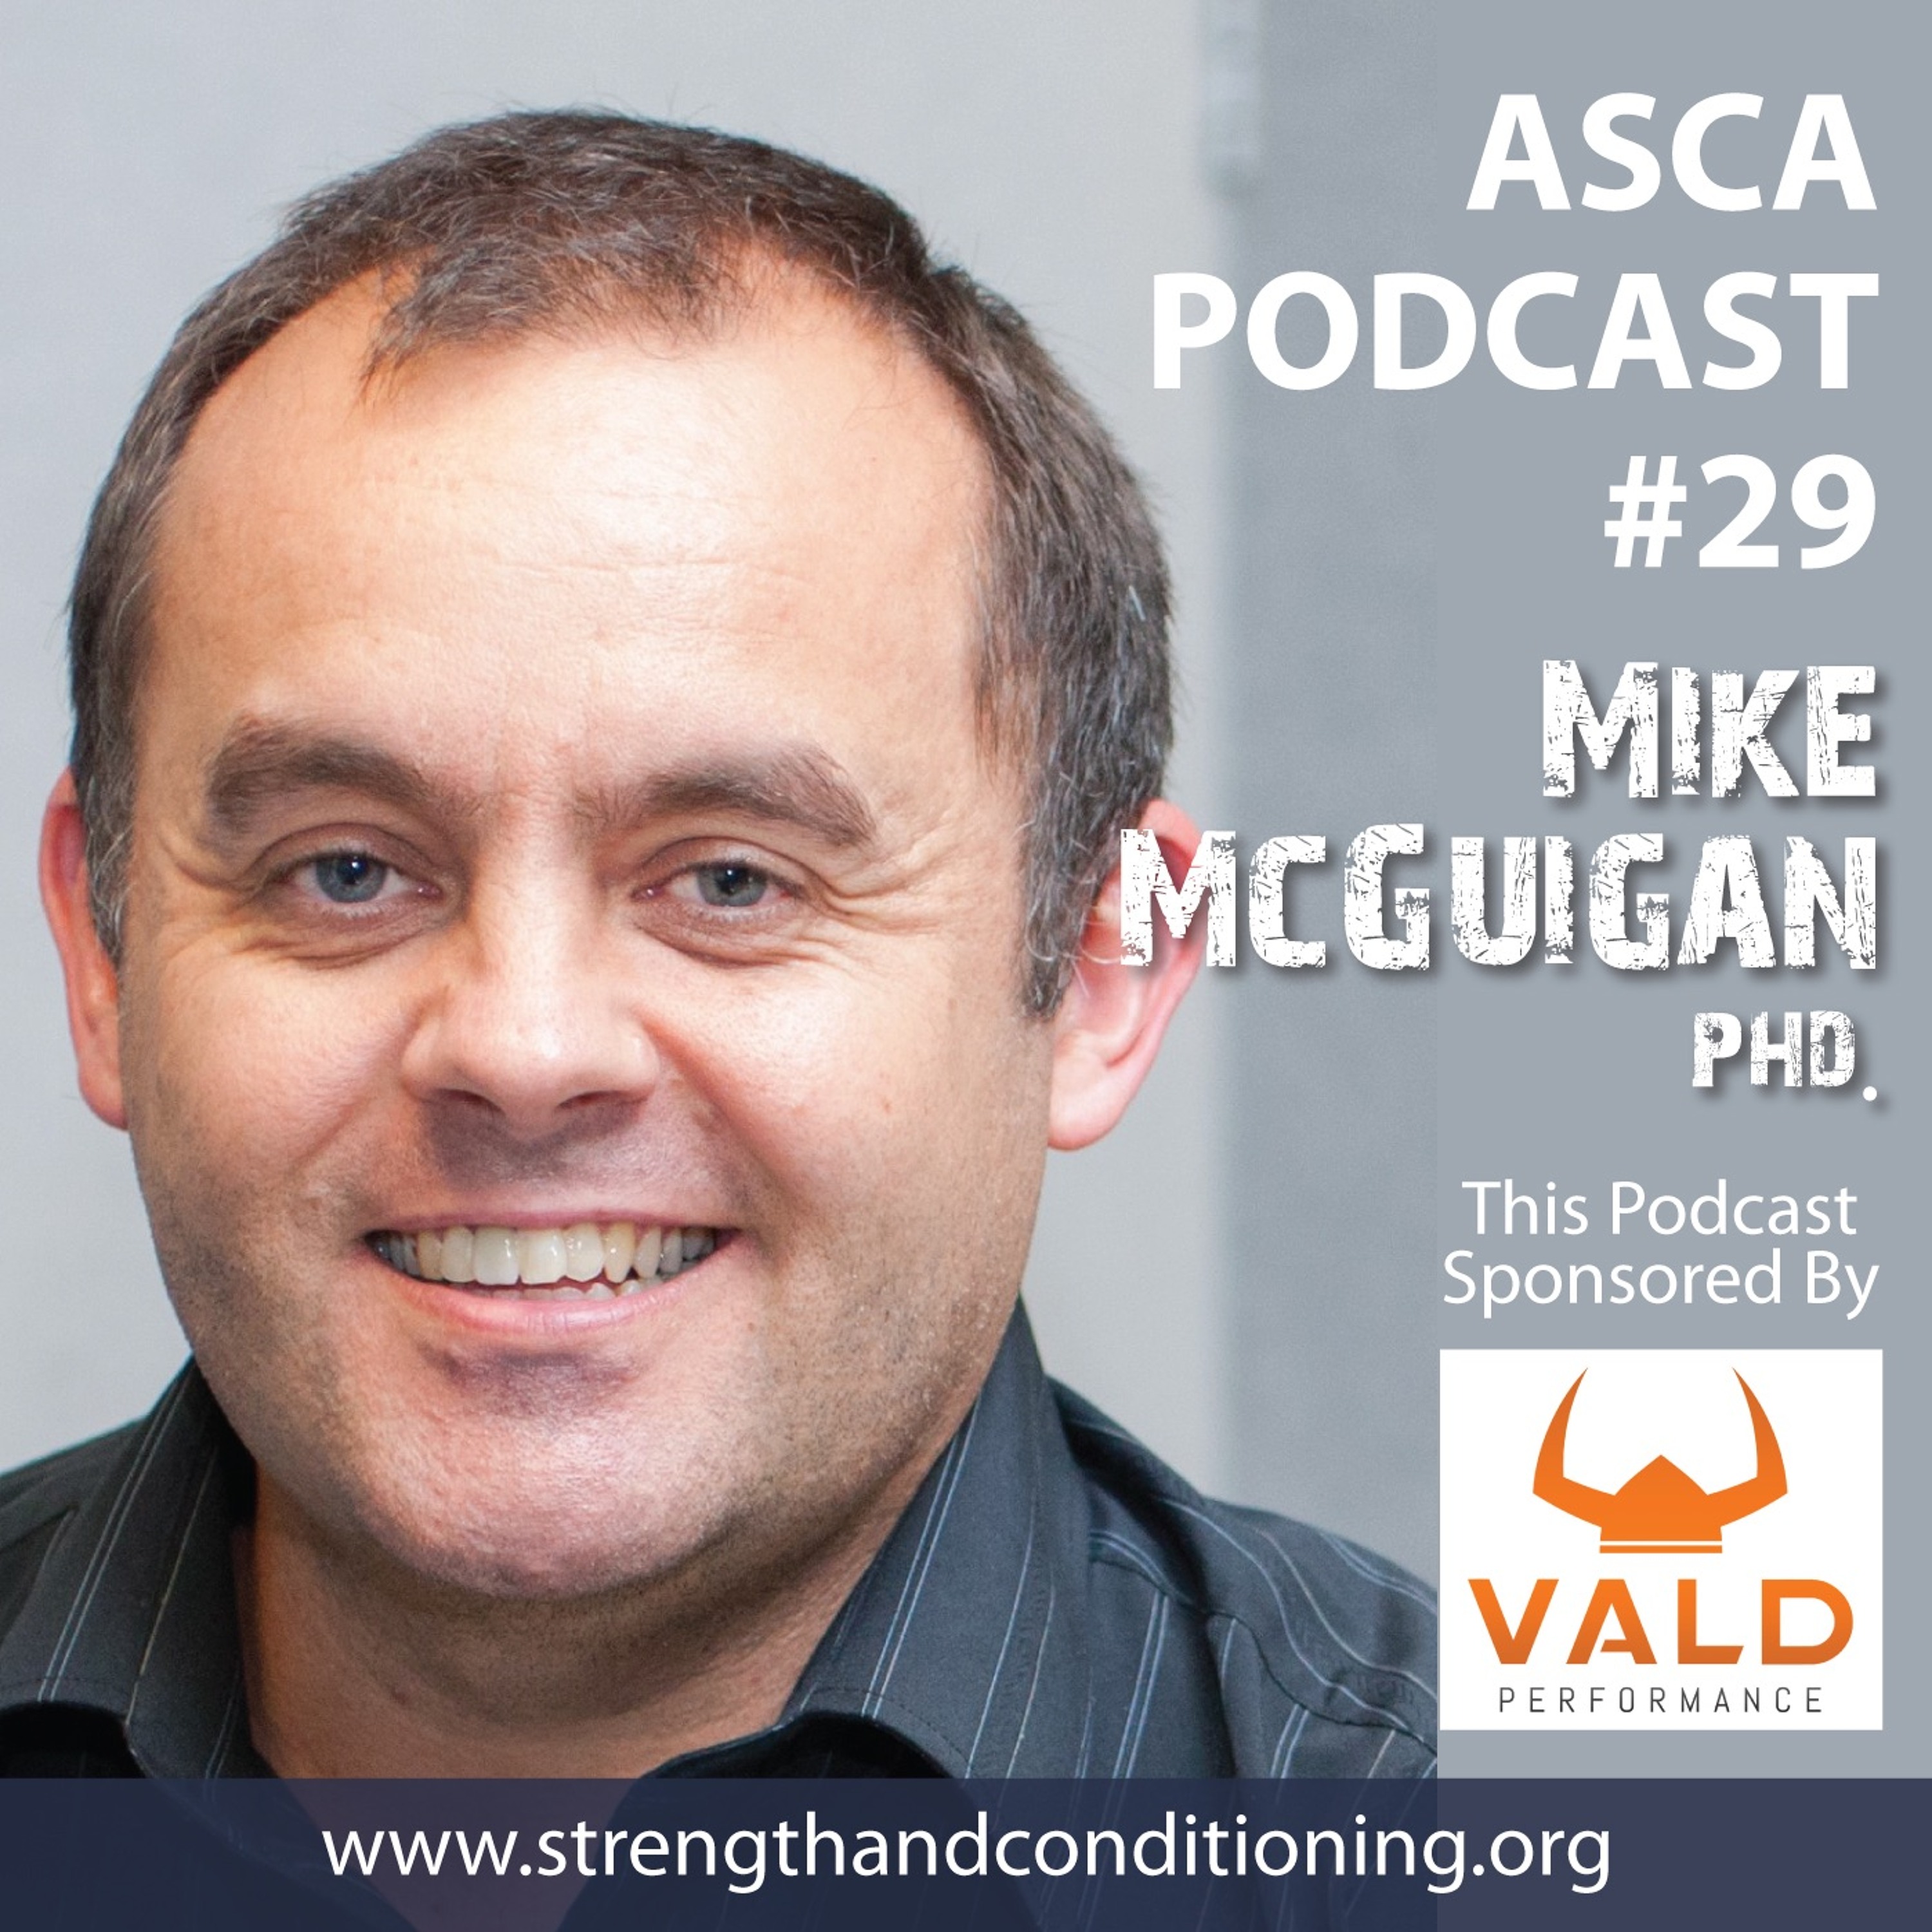 ASCA Podcast #29 - Mike McGuigan